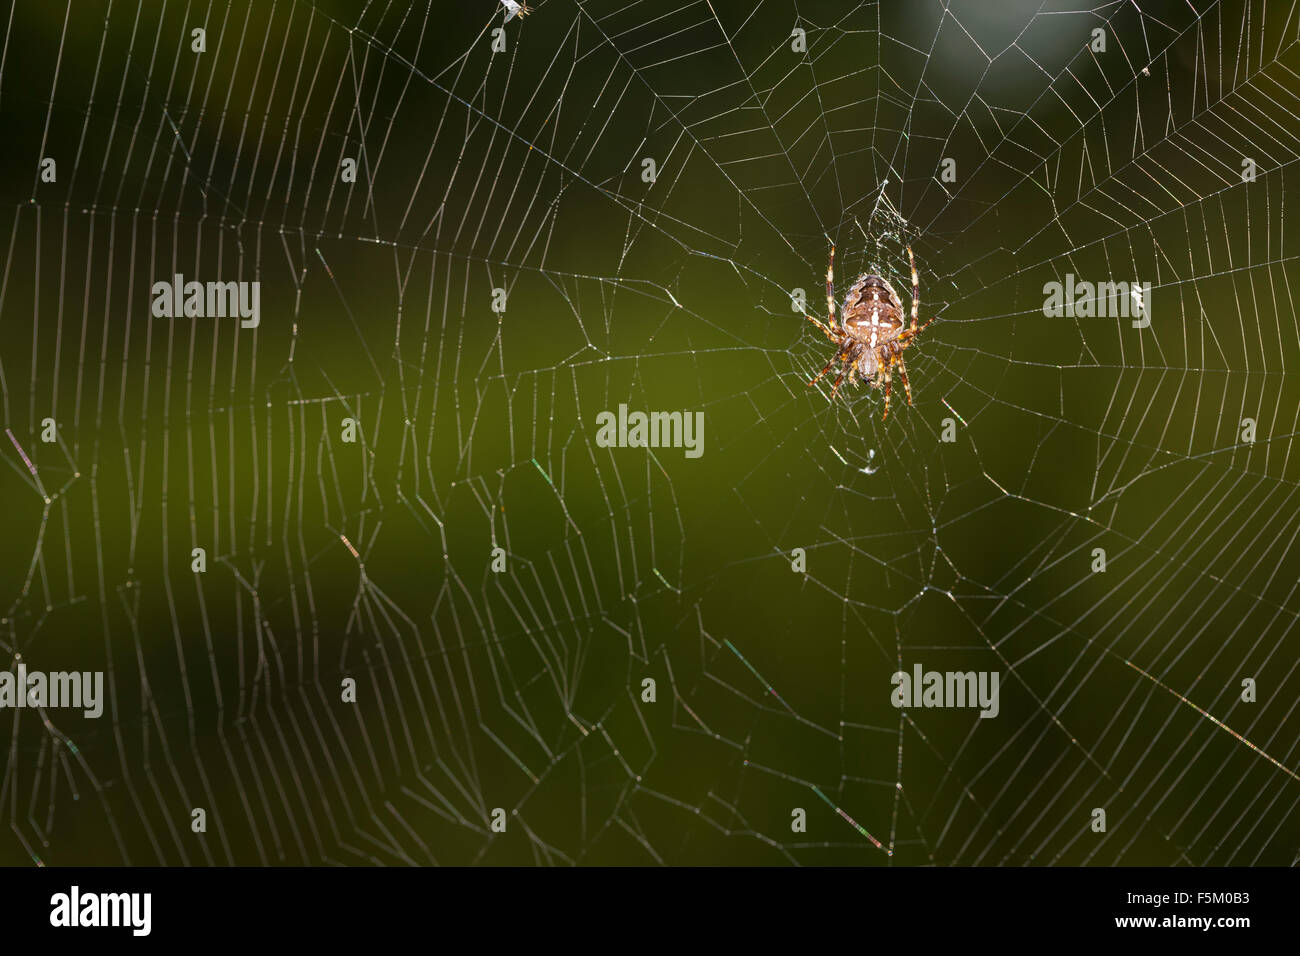 Croce orbweaver, giardino europeo spider, cross spider, ragnatela, Garten-Kreuzspinne, Gartenkreuzspinne, Netz, Araneus diadematus Foto Stock